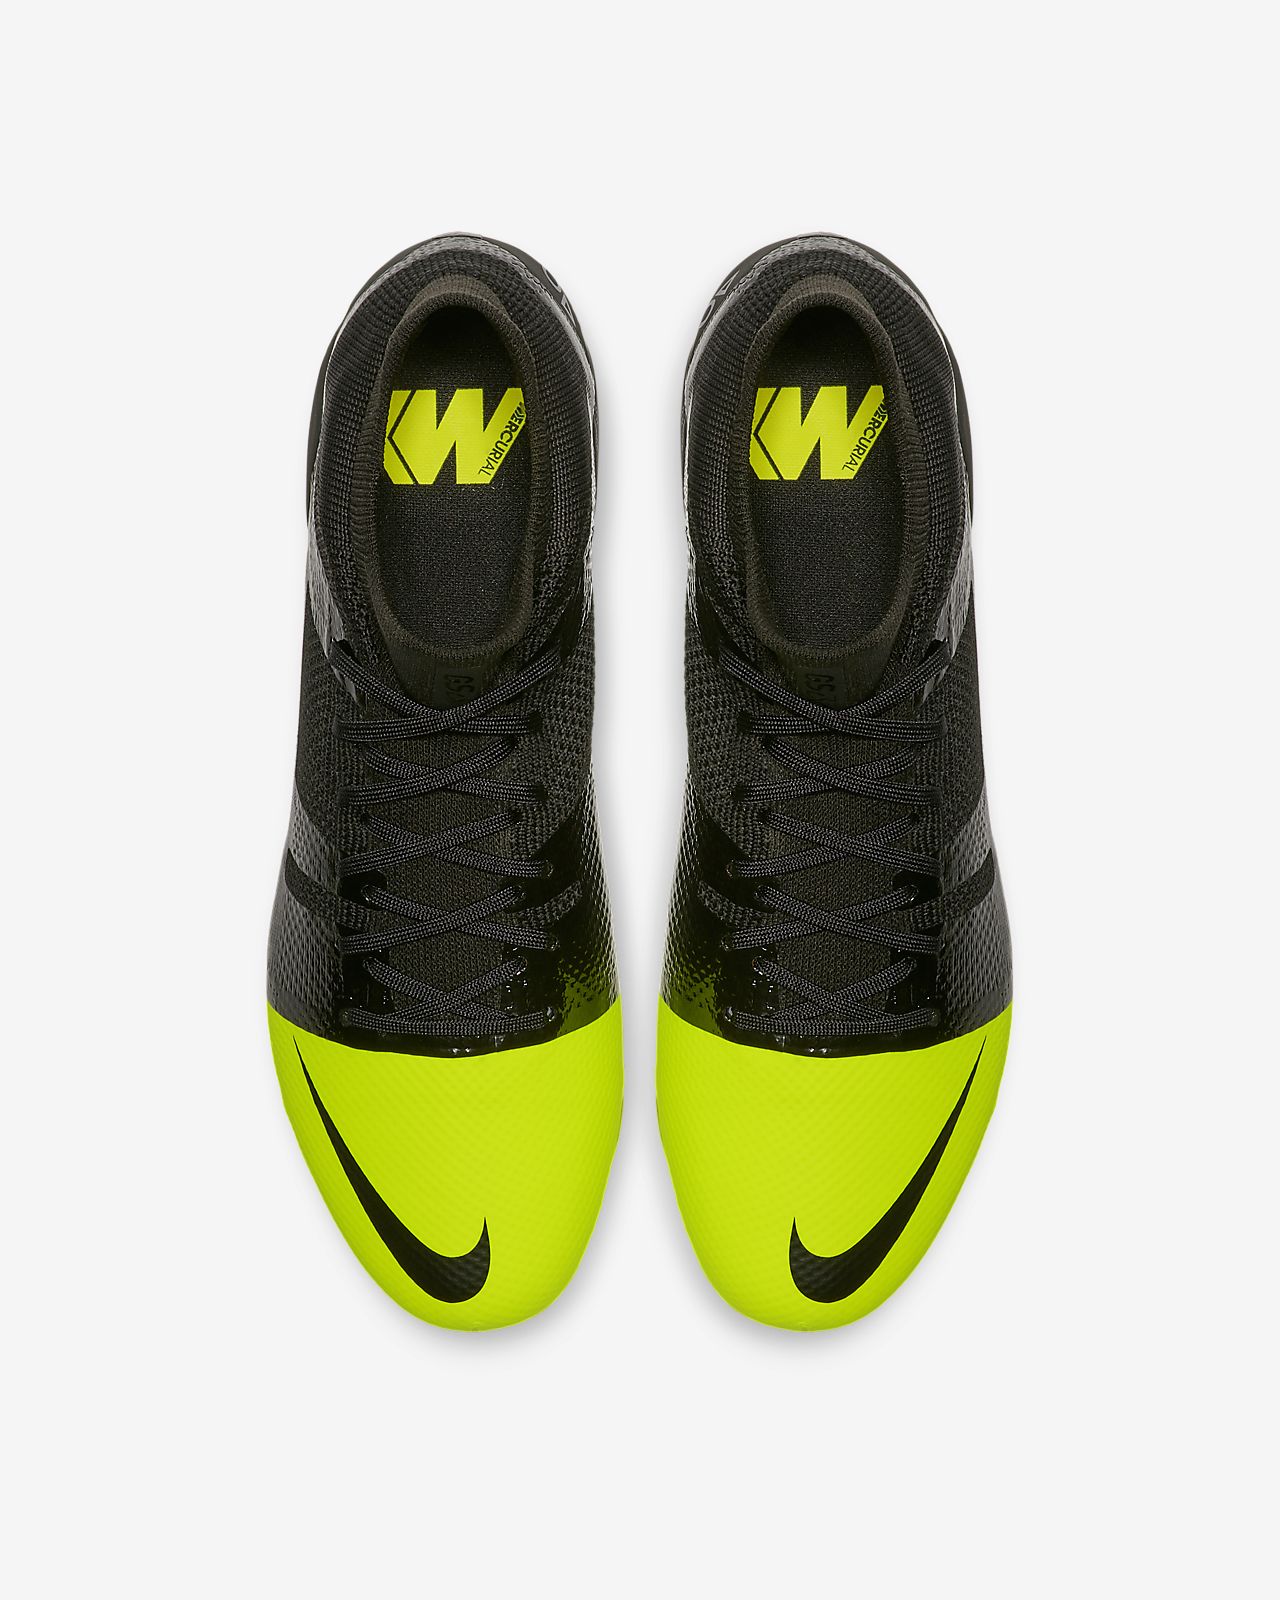 Nike Mercurial Vapor XII Pro TF Mens Soccer Cleats Turf